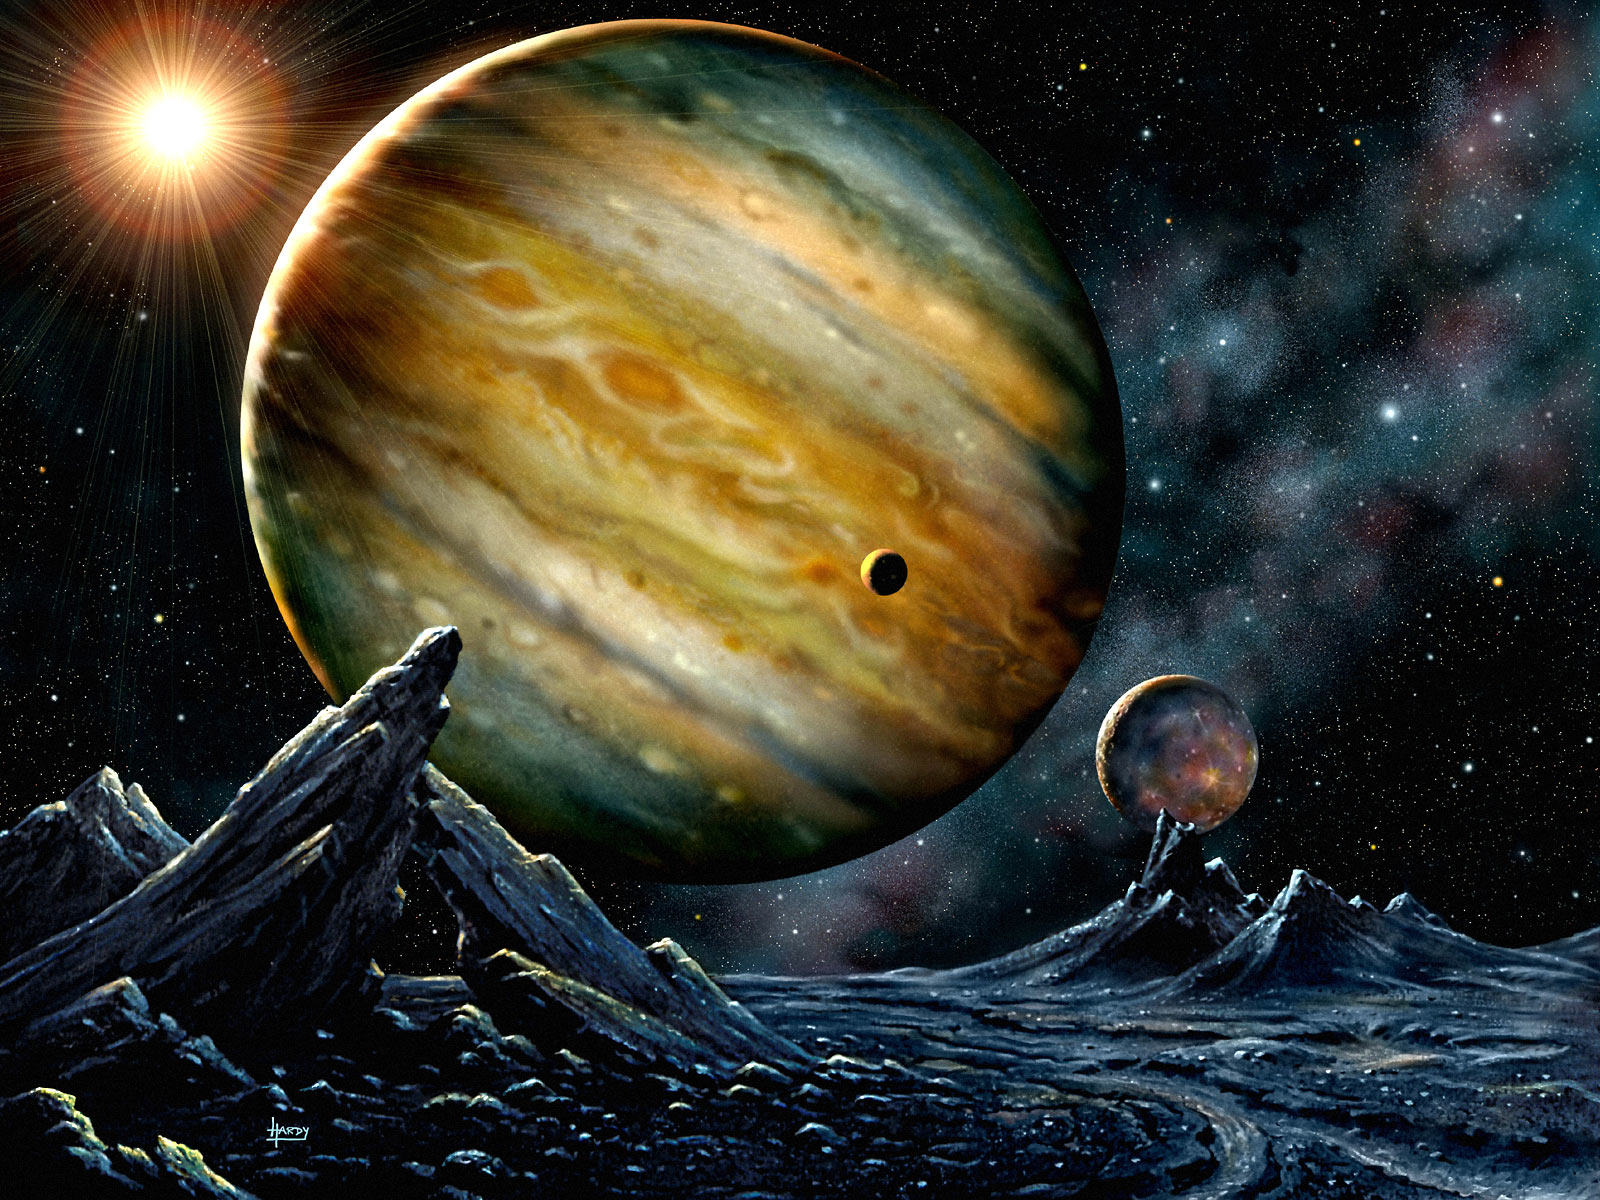 Missing planet explains our solar system’s structure